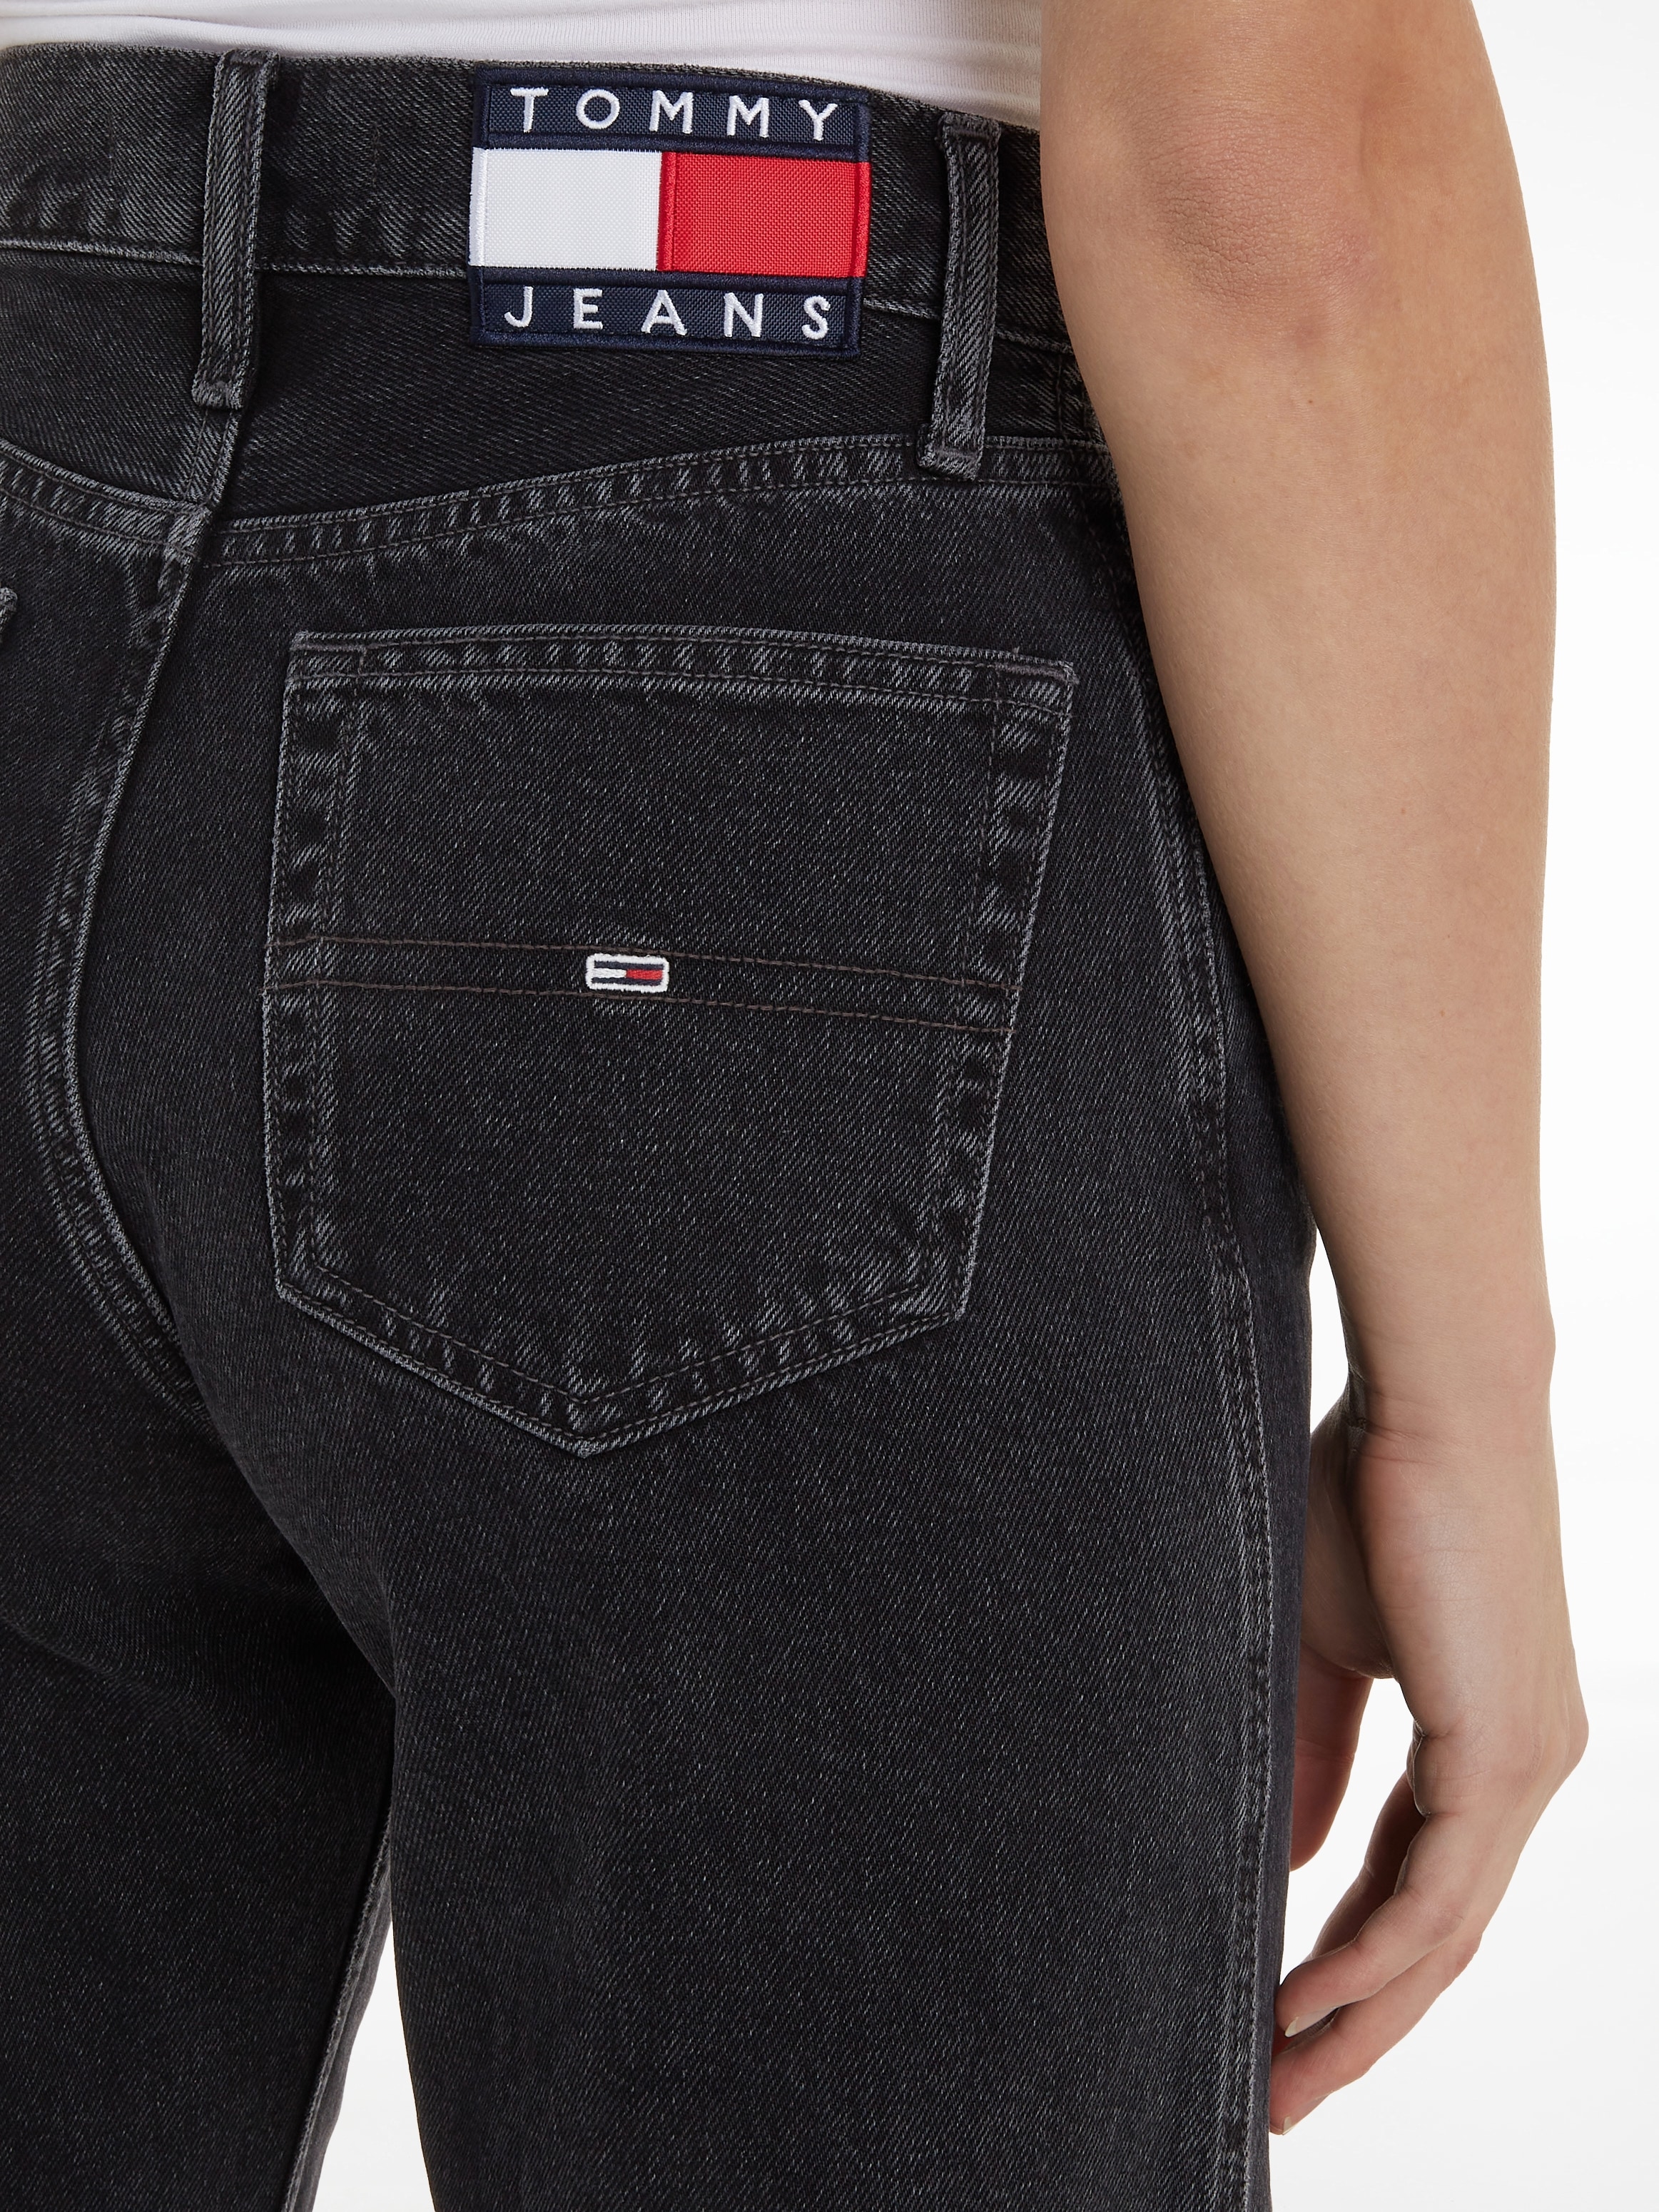 LS Tommy CG4139«, dem Jeans Bund MR Loose-fit-Jeans shoppen mit »BETSY Markenlabel auf